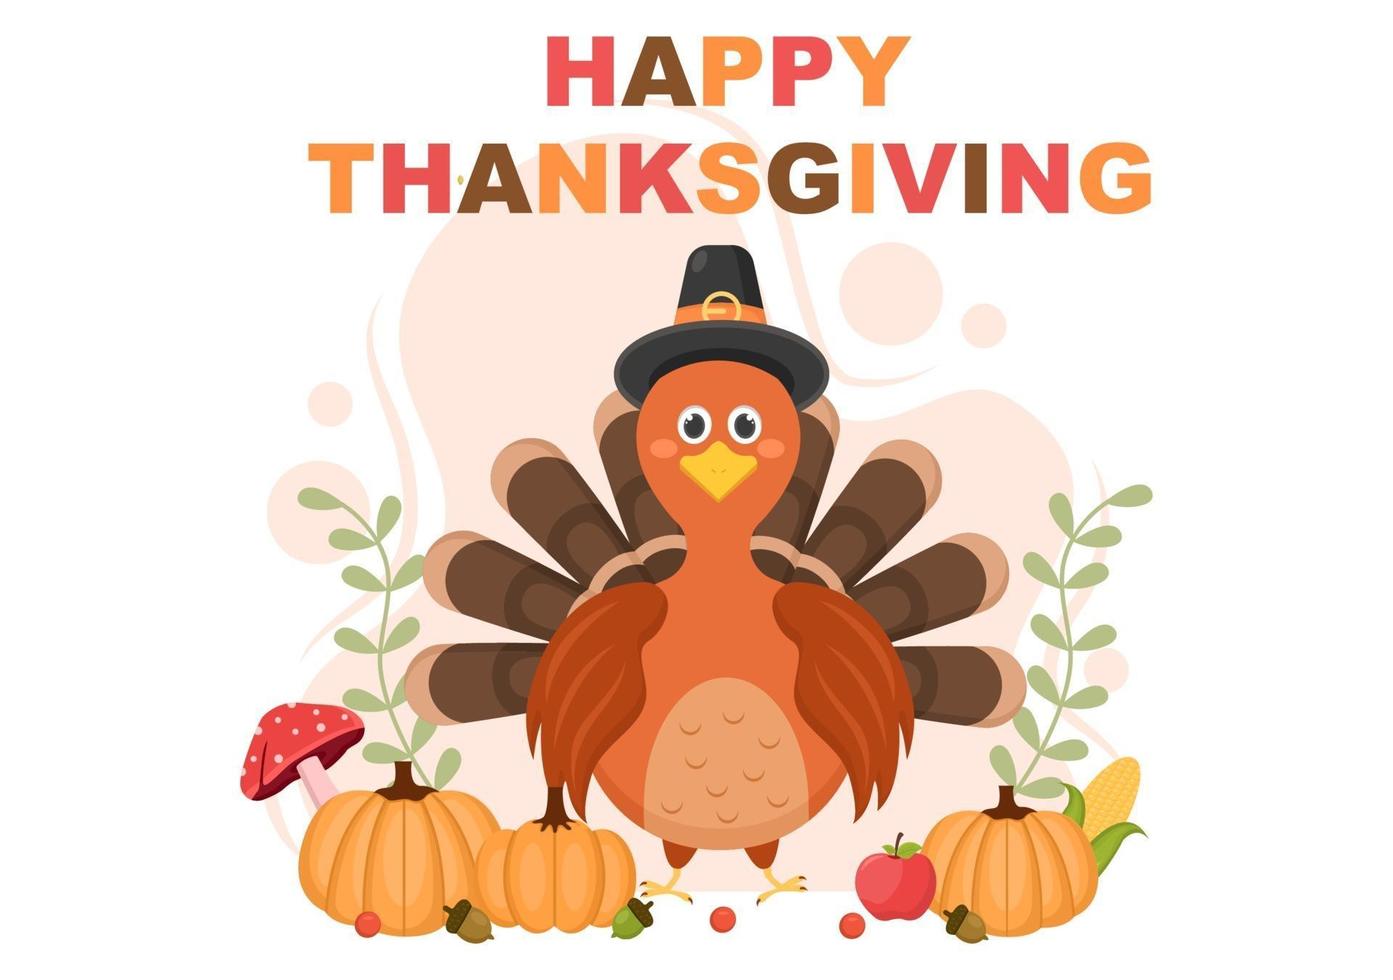 Happy Thanksgiving with Cartoon Turkey Vector Illustration